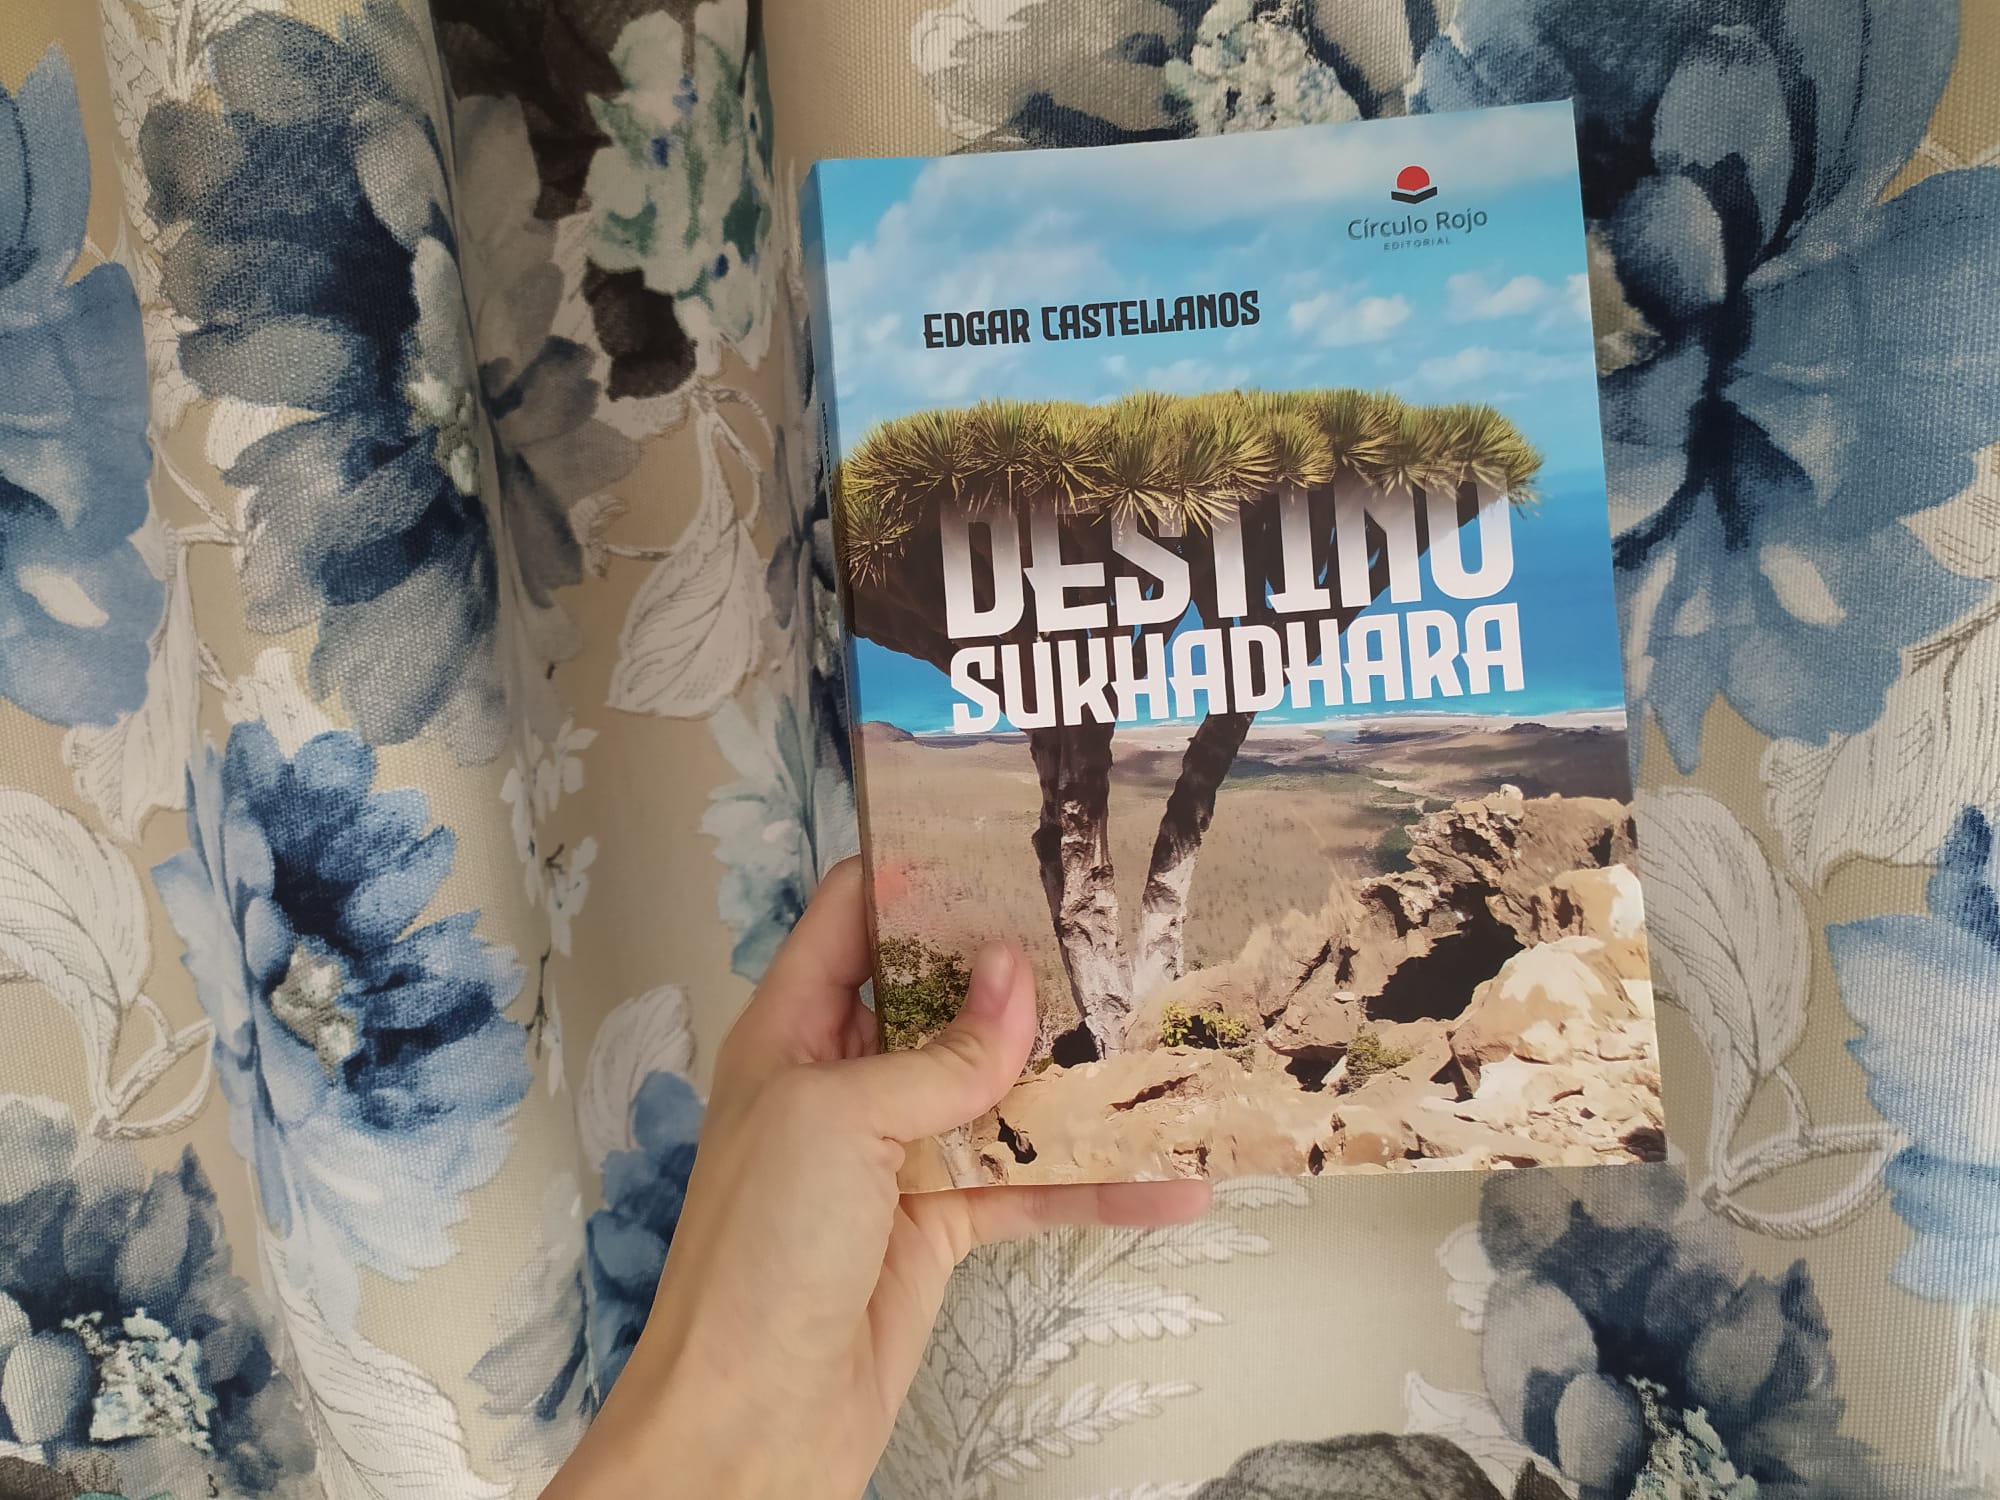 Edgar Castellanos Bodegas "Destino Sukhadhara (INVESTIGACION)"